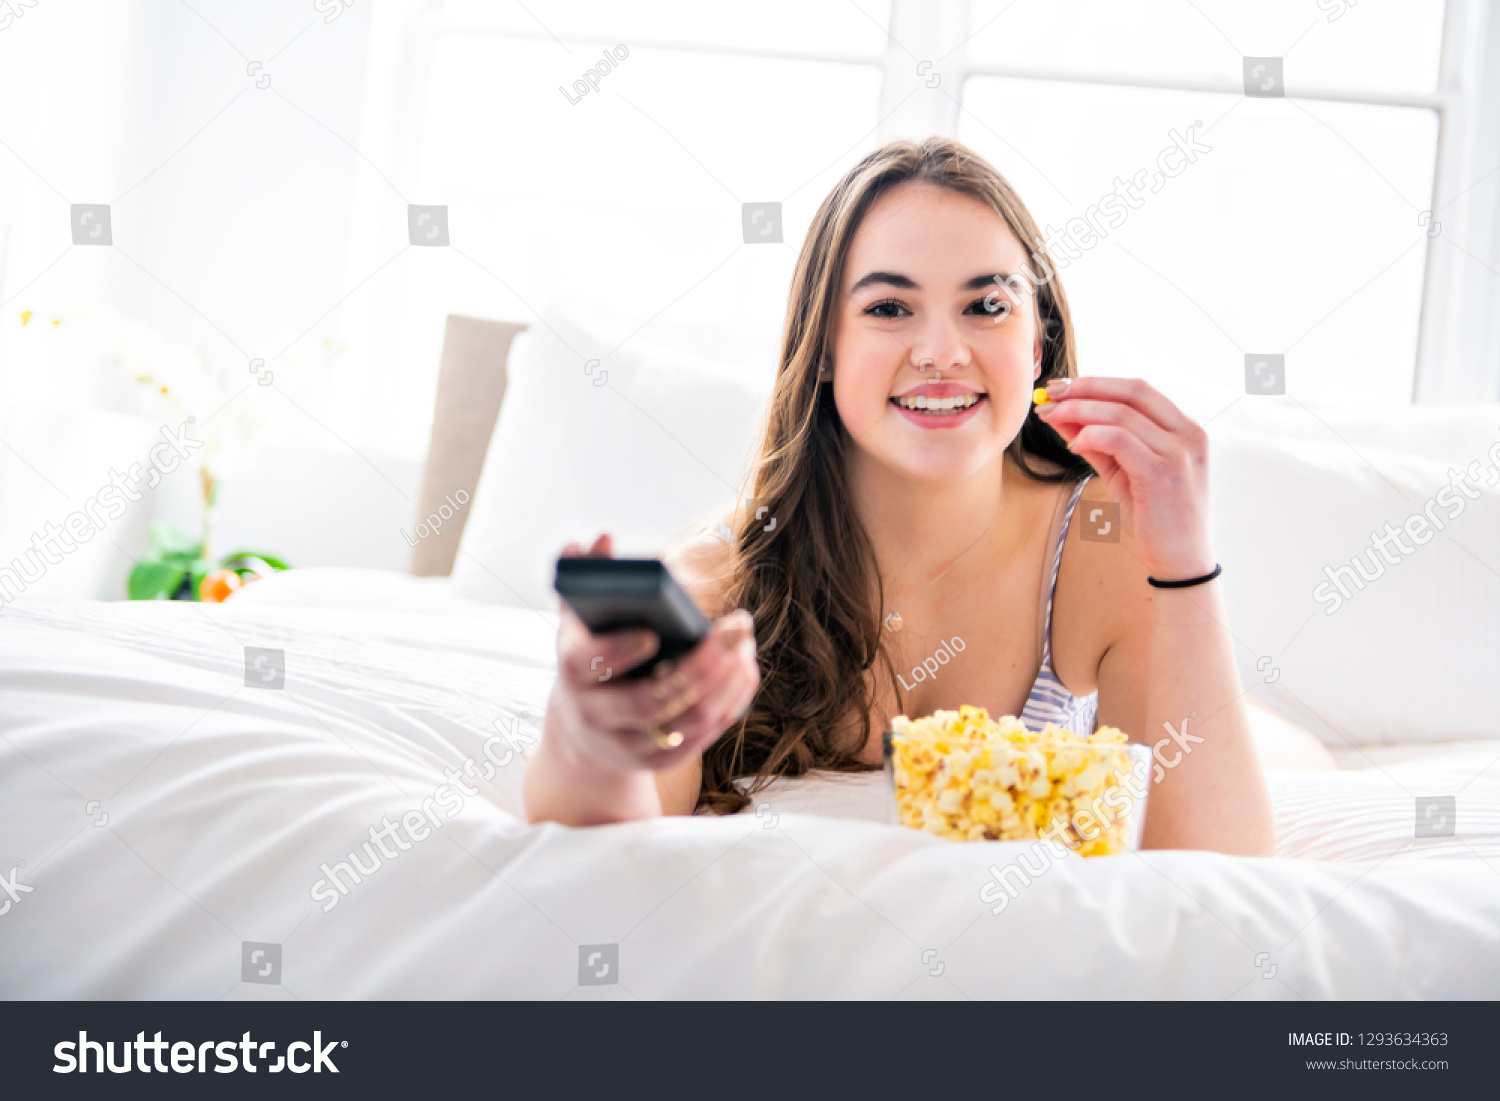 Popcorn in bed cassie age